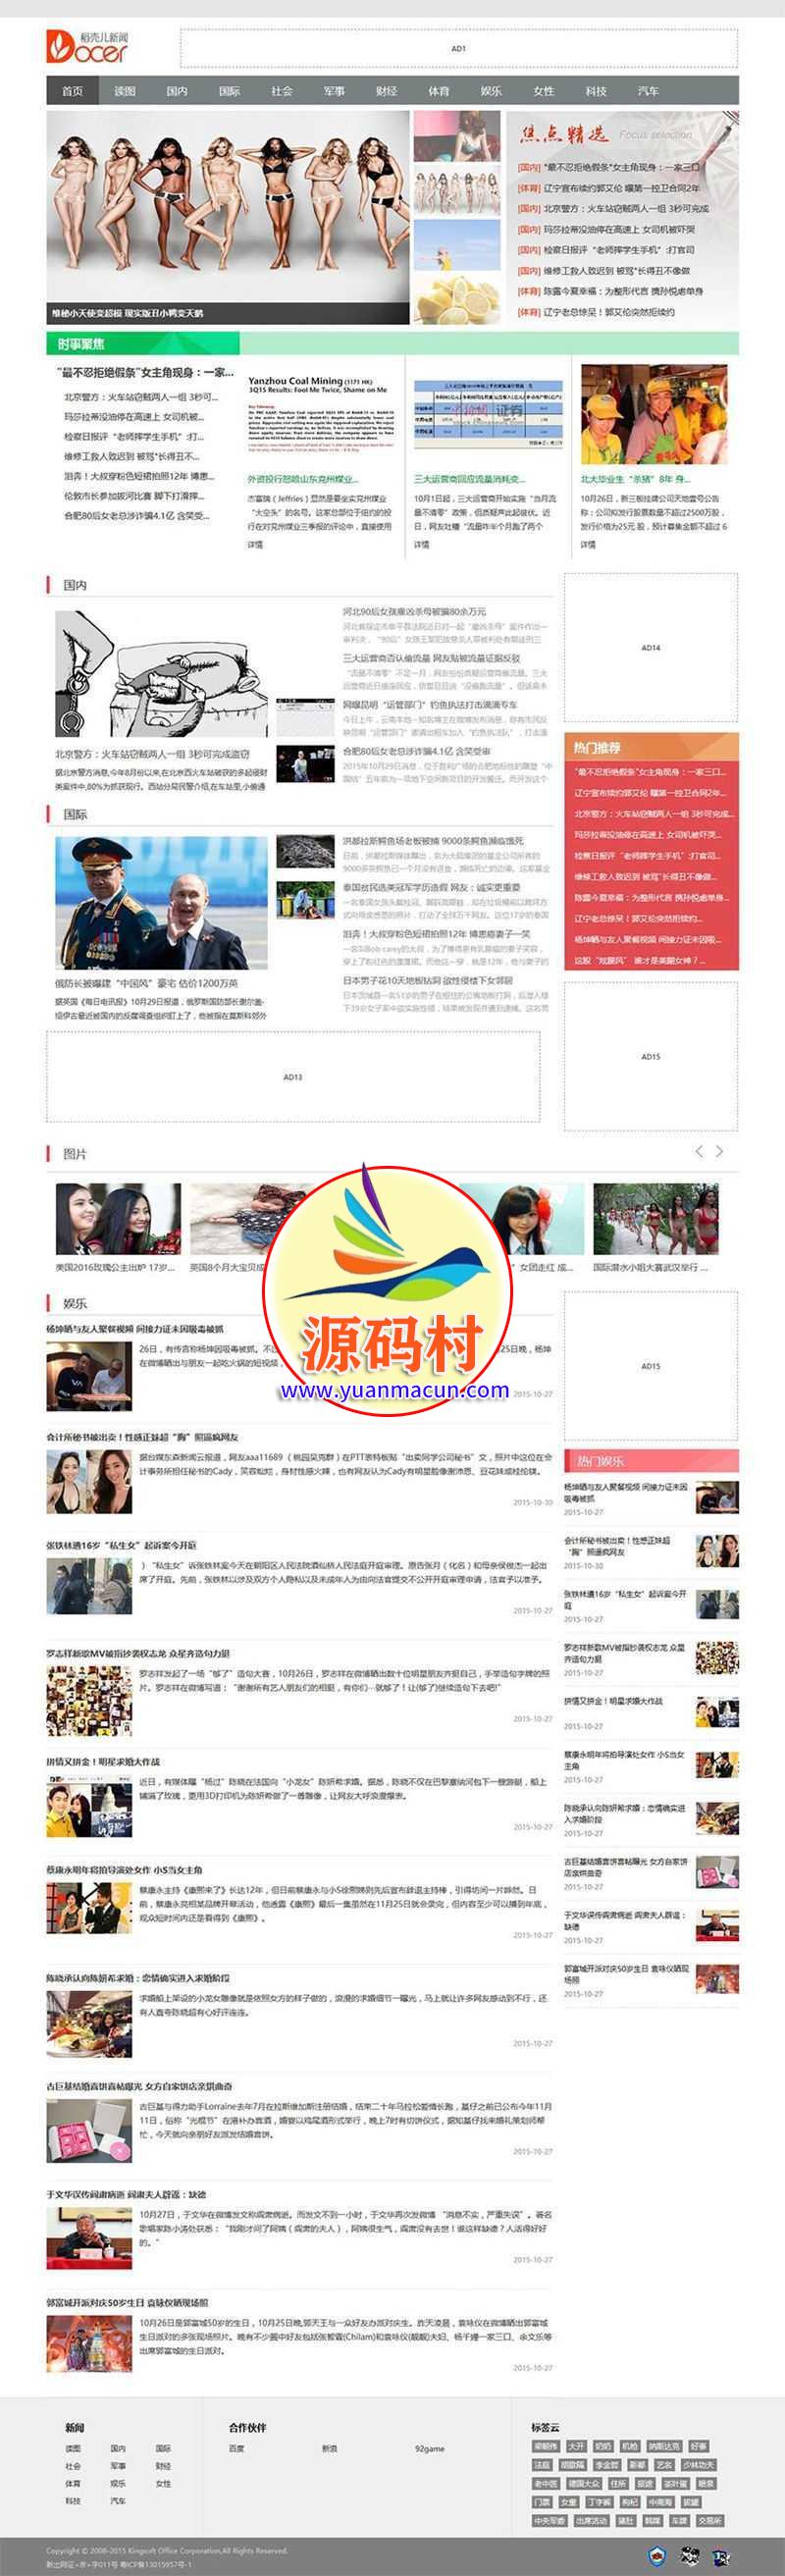  92kaifa精仿《稻壳新闻》新闻资讯帝国CMS网站模板